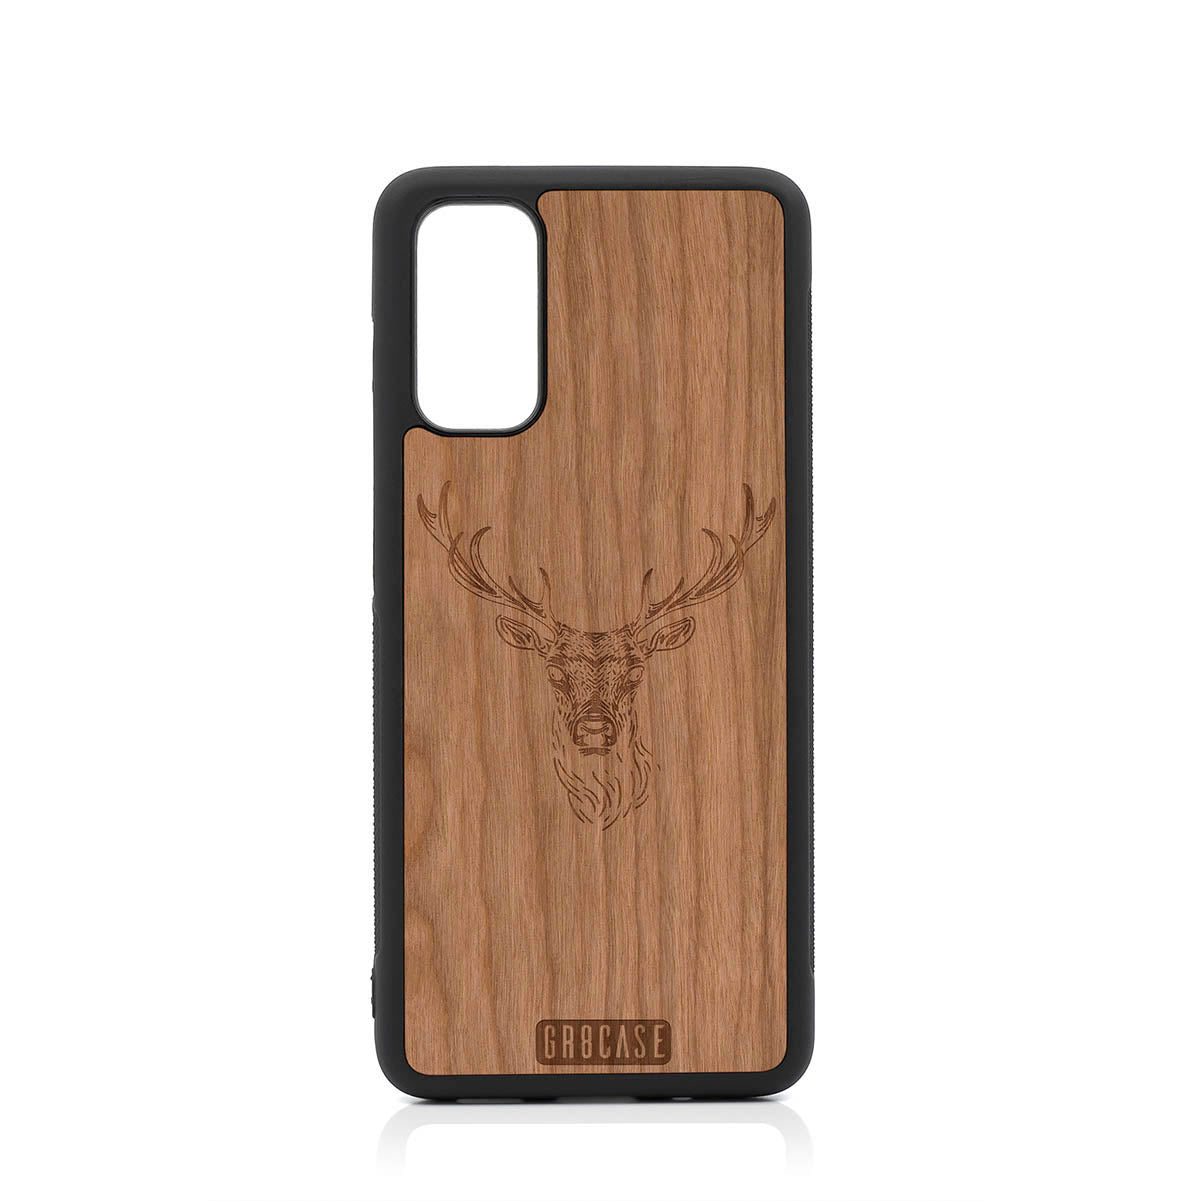 Elk Buck Design Wood Case For Samsung Galaxy S20 by GR8CASE